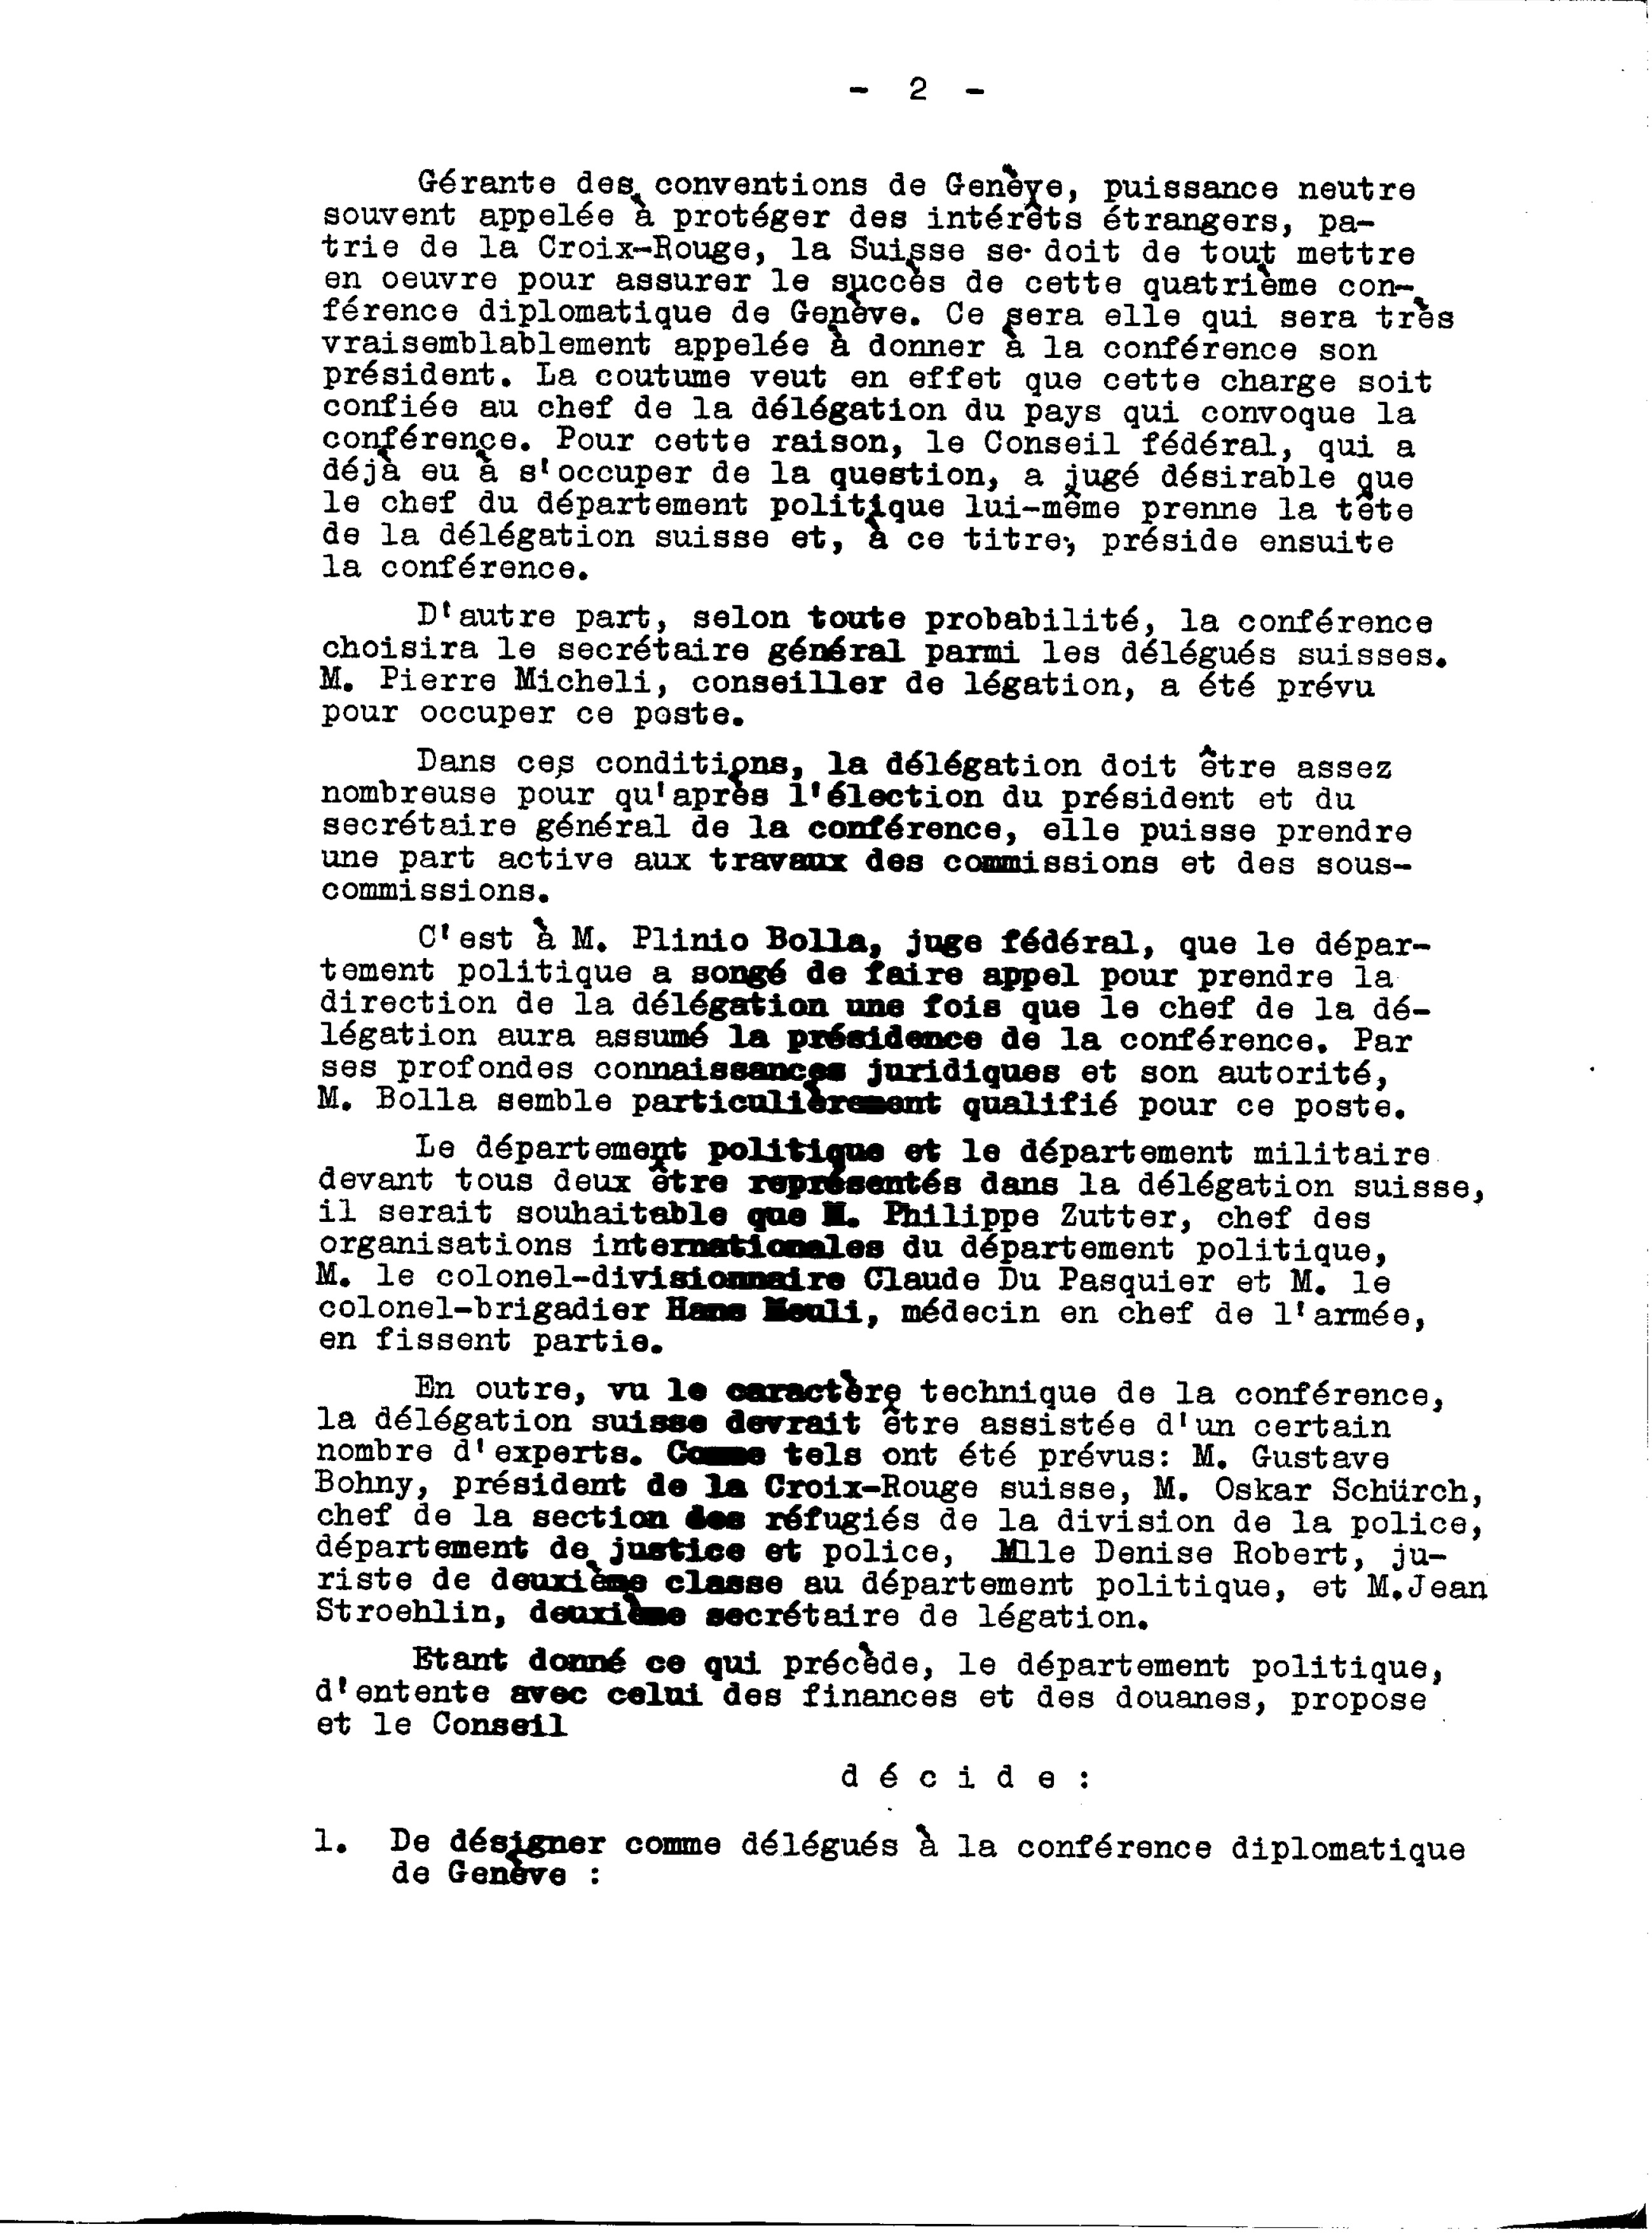 Décision du Conseil fédéral du 1er avril 1949